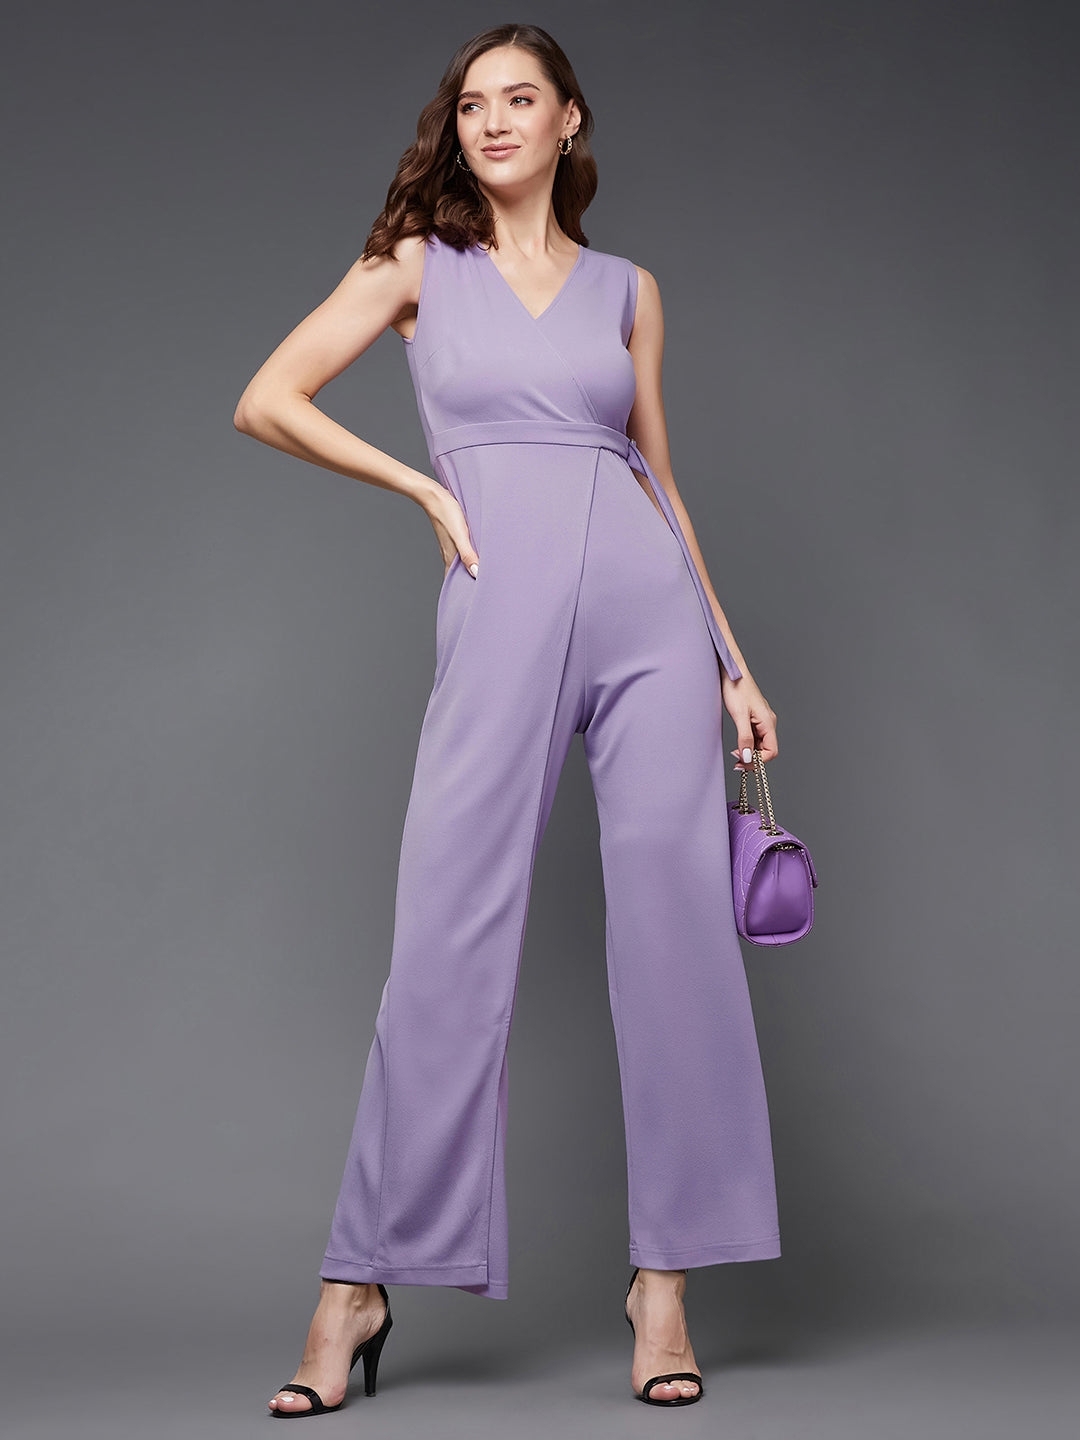 Light Lavender V-Neck Sleeveless Solid Wrap Regular Length Jumpsuit